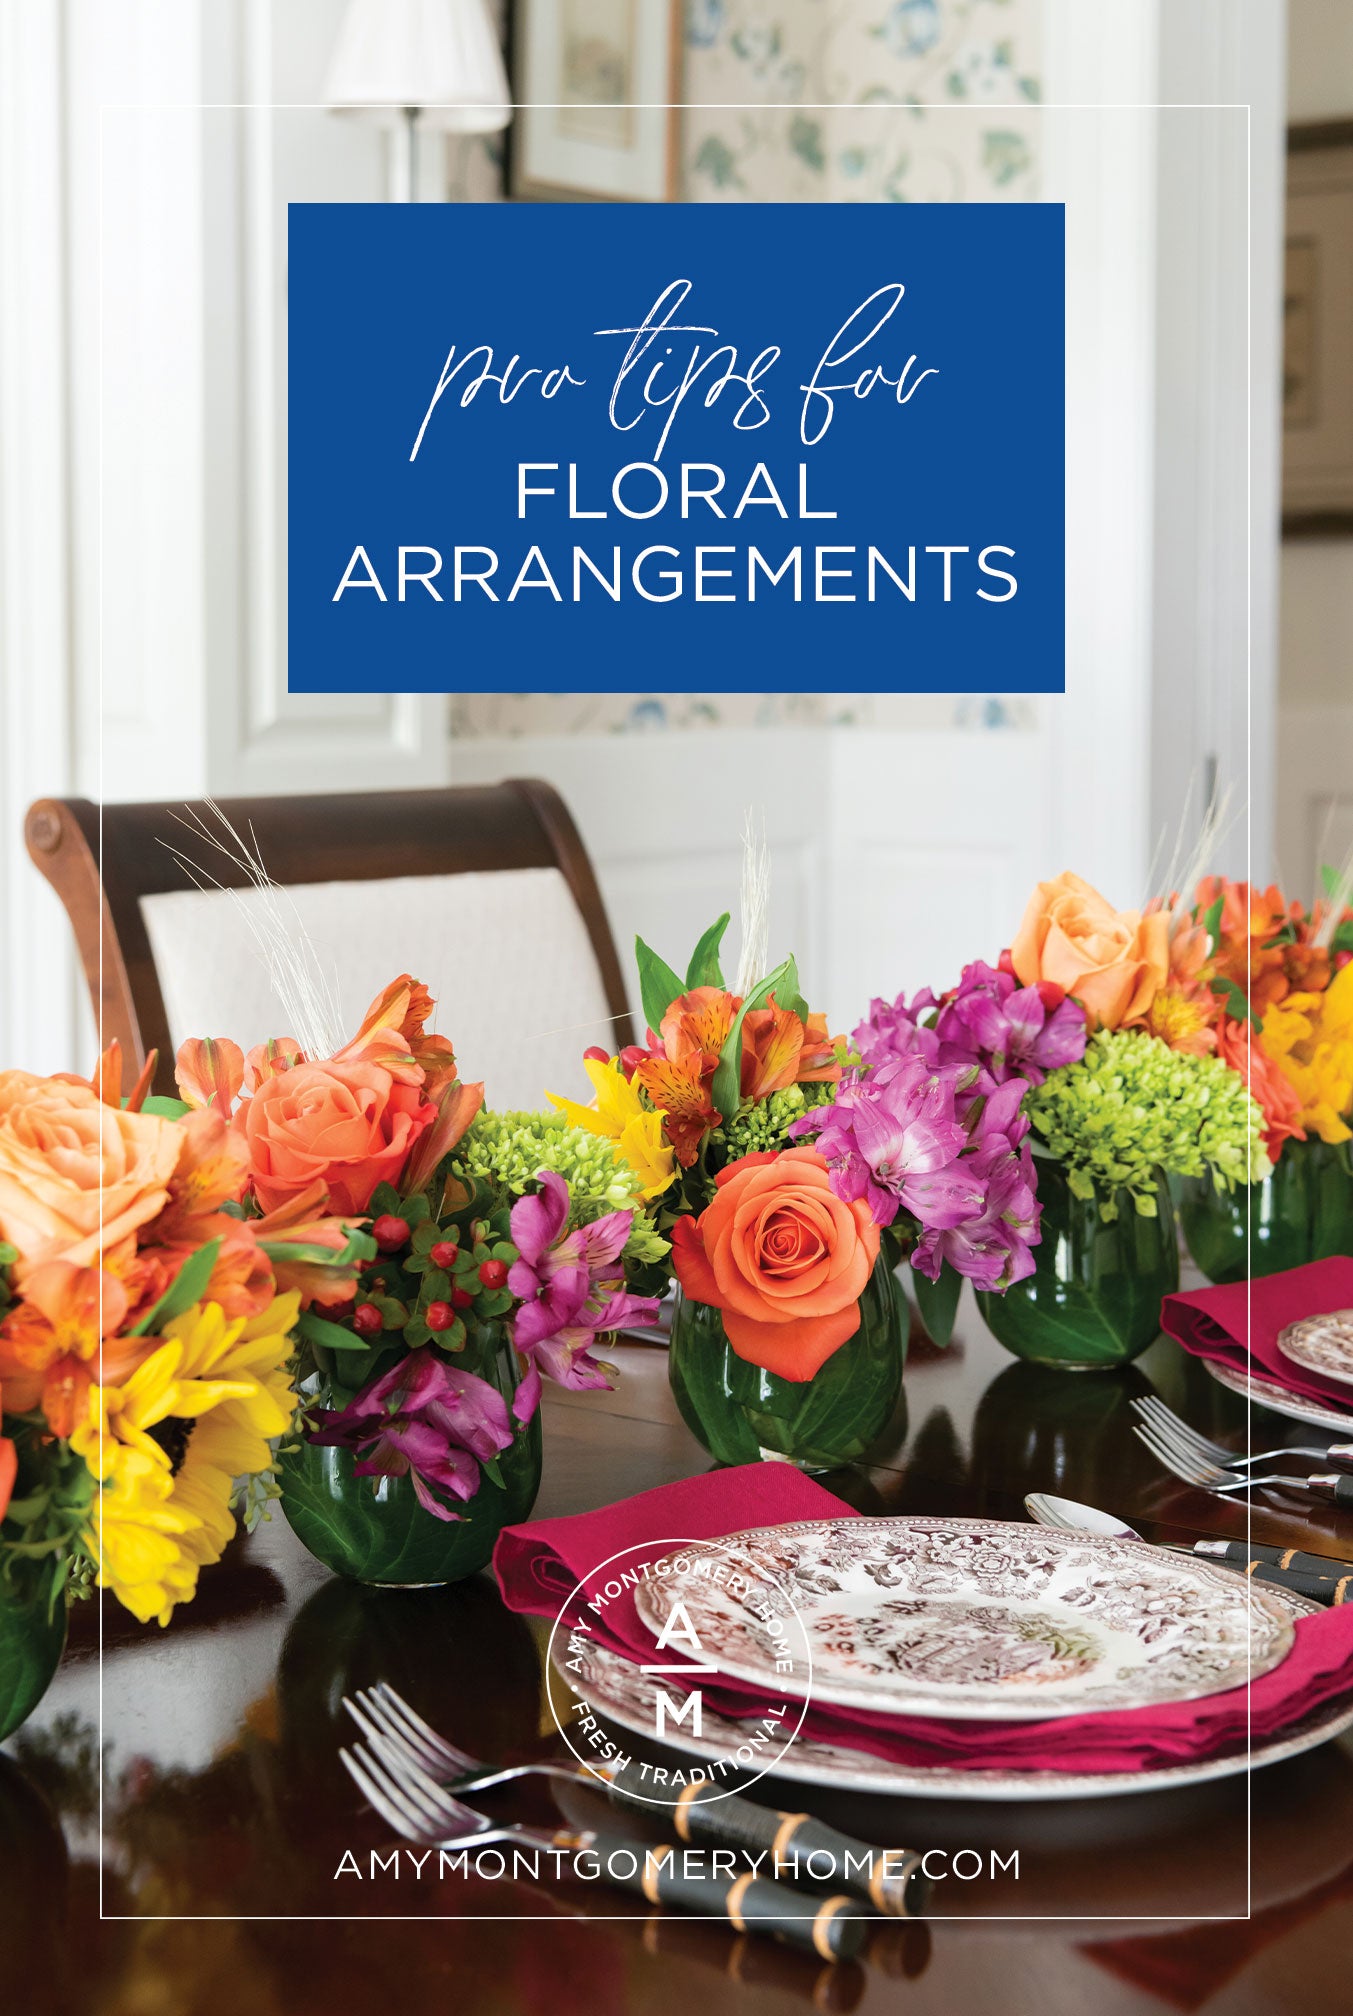 Pro Tips For Your Floral Arrangements